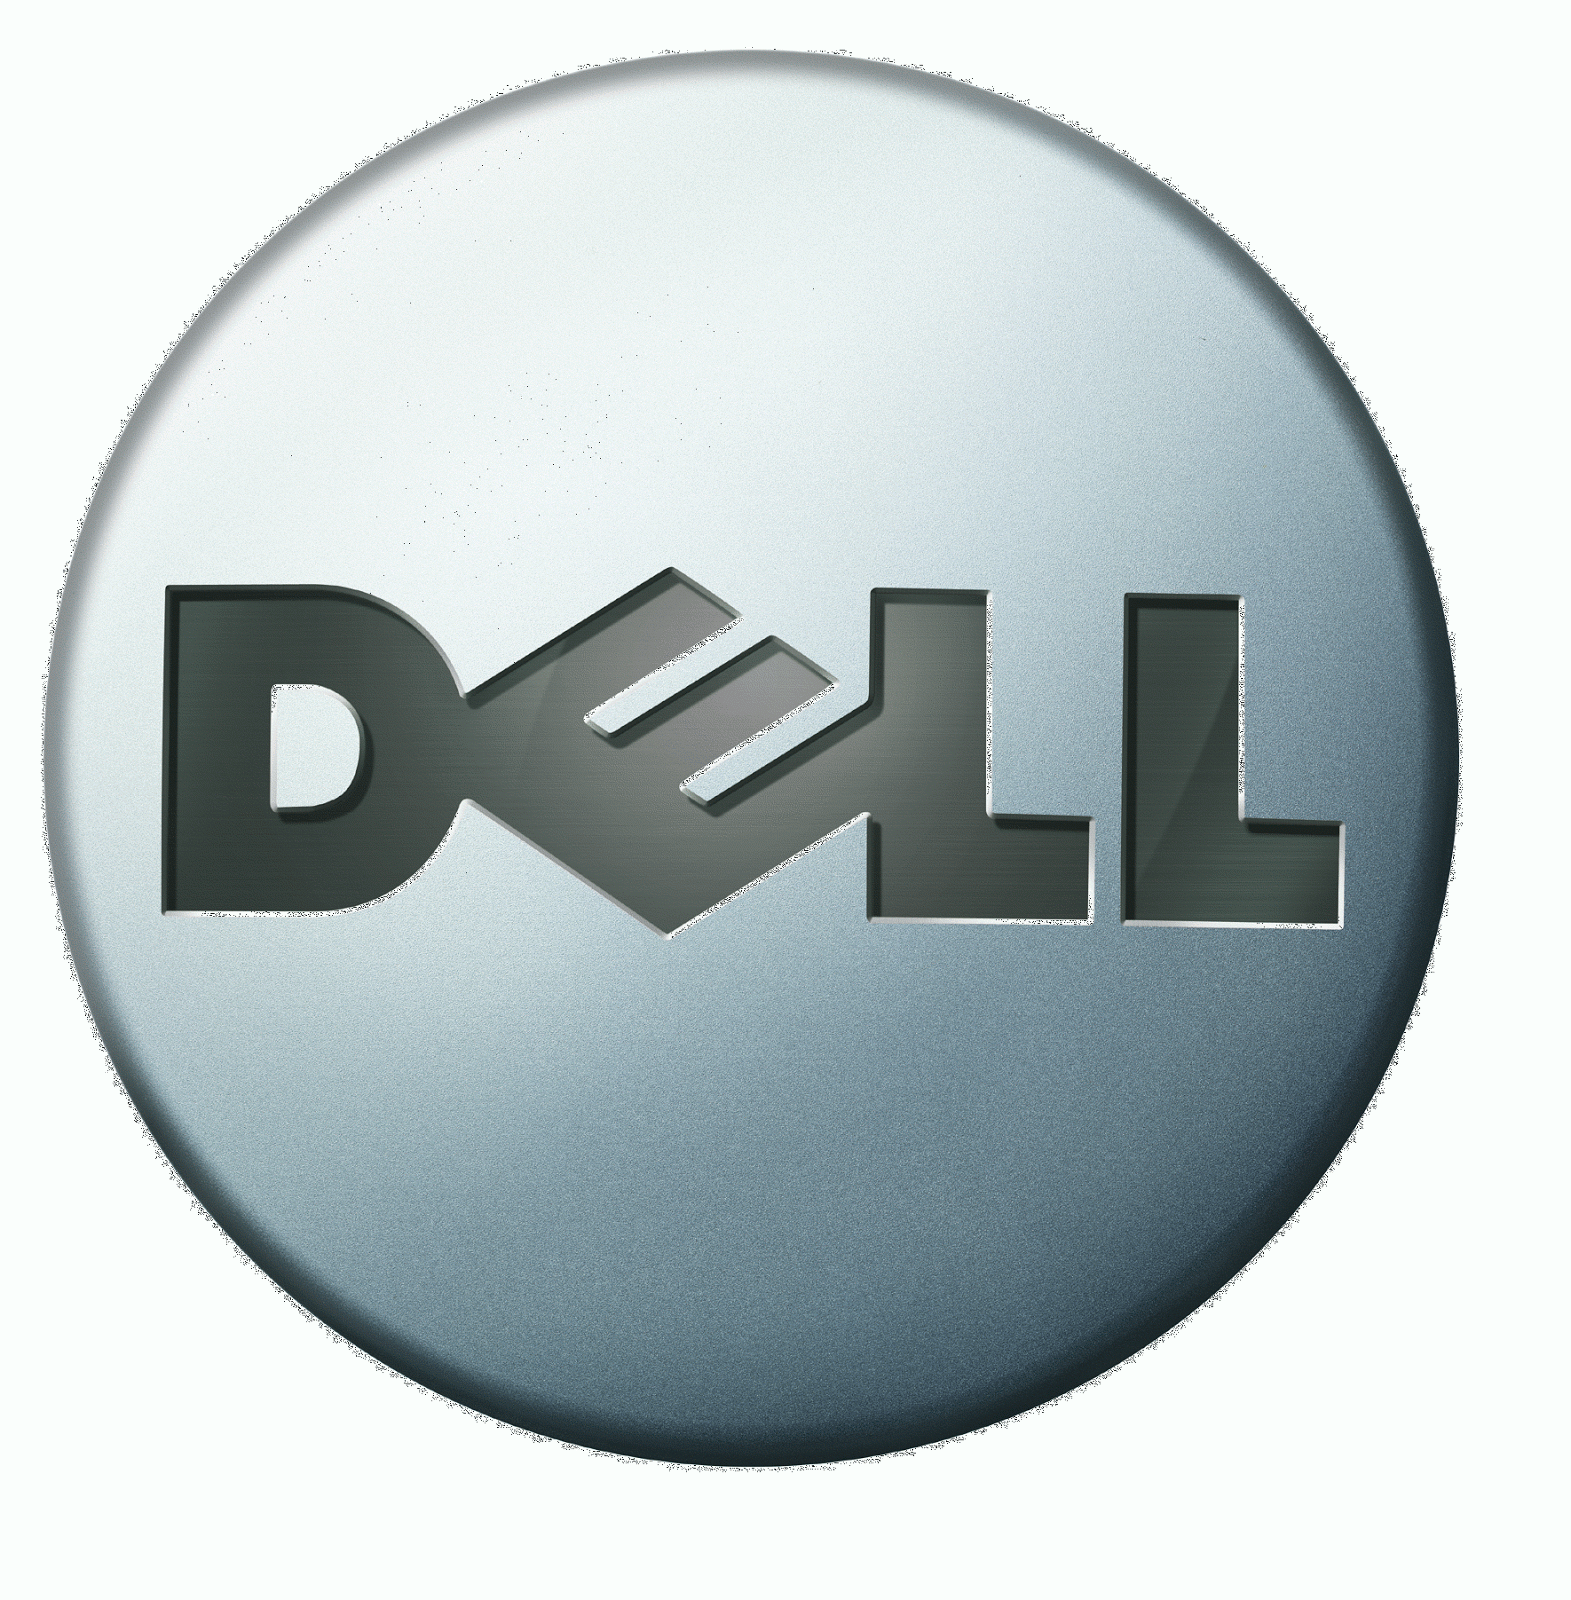 Dell Oem Logo Windows 10 - HD Wallpaper 